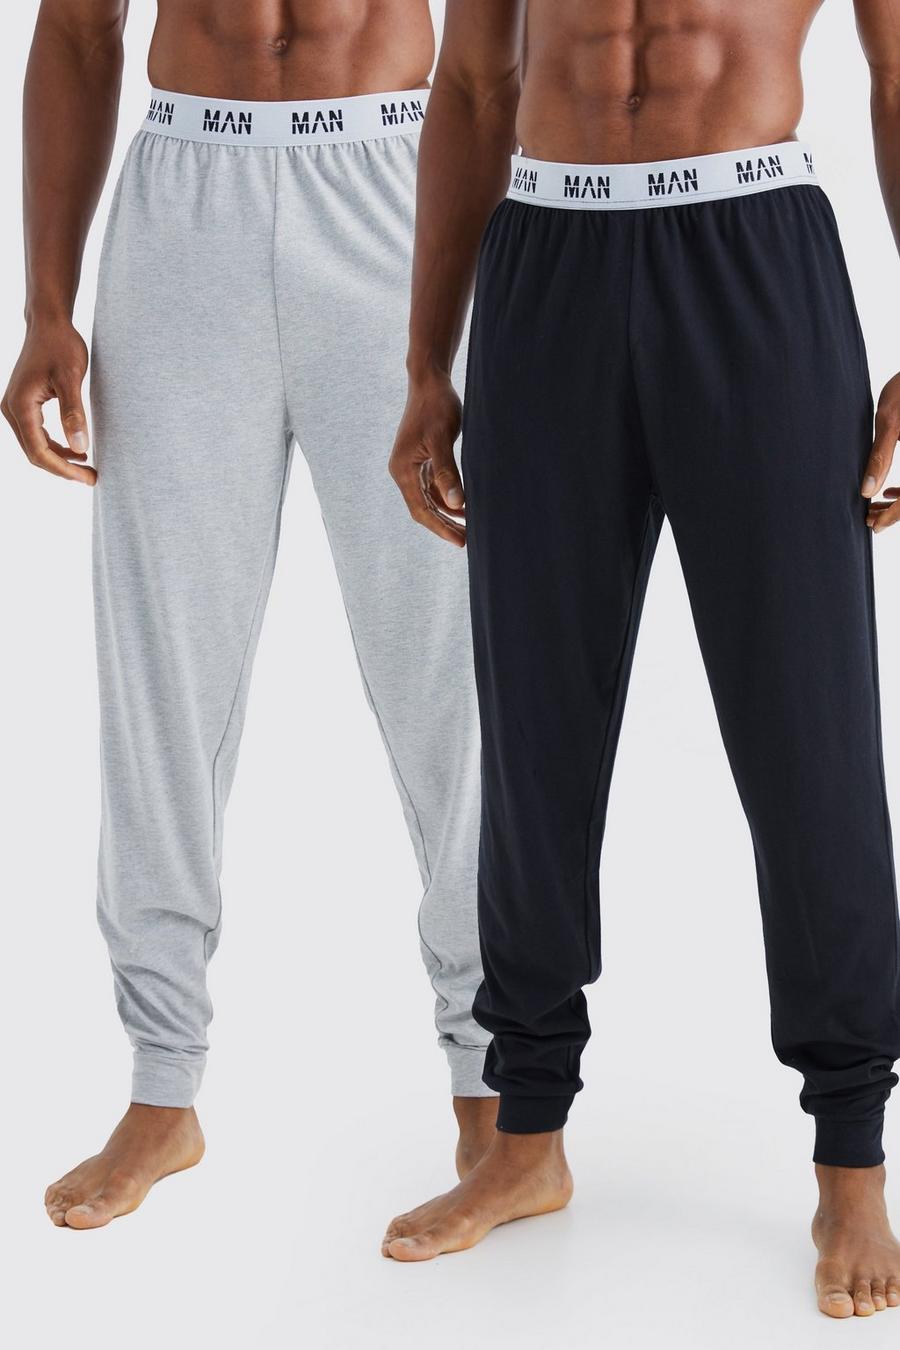 Multi 2 Pack Man Loungewear Sweatpants